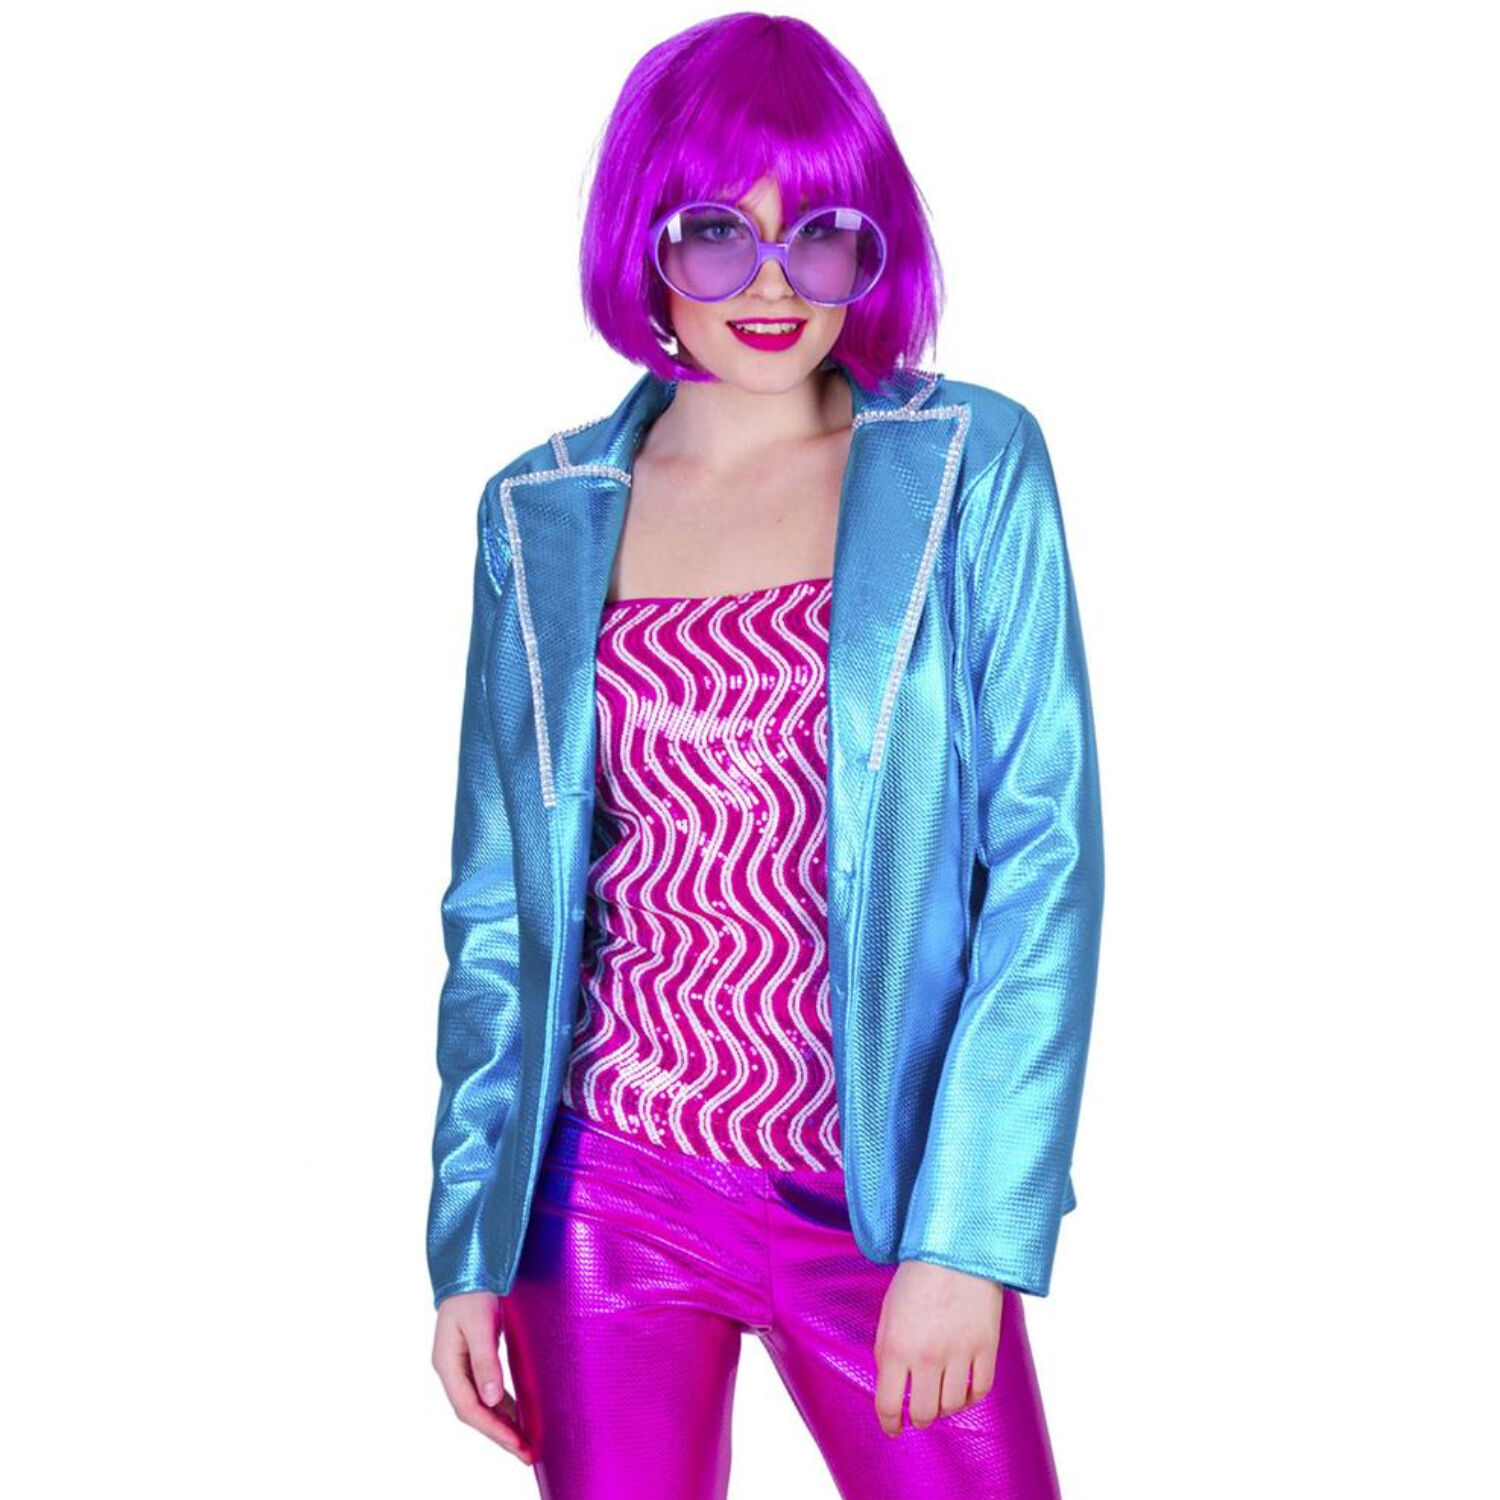 NEU Damen-Kostüm Disco-Fever-Jacke, blau, Gr. 36-38 Bild 2